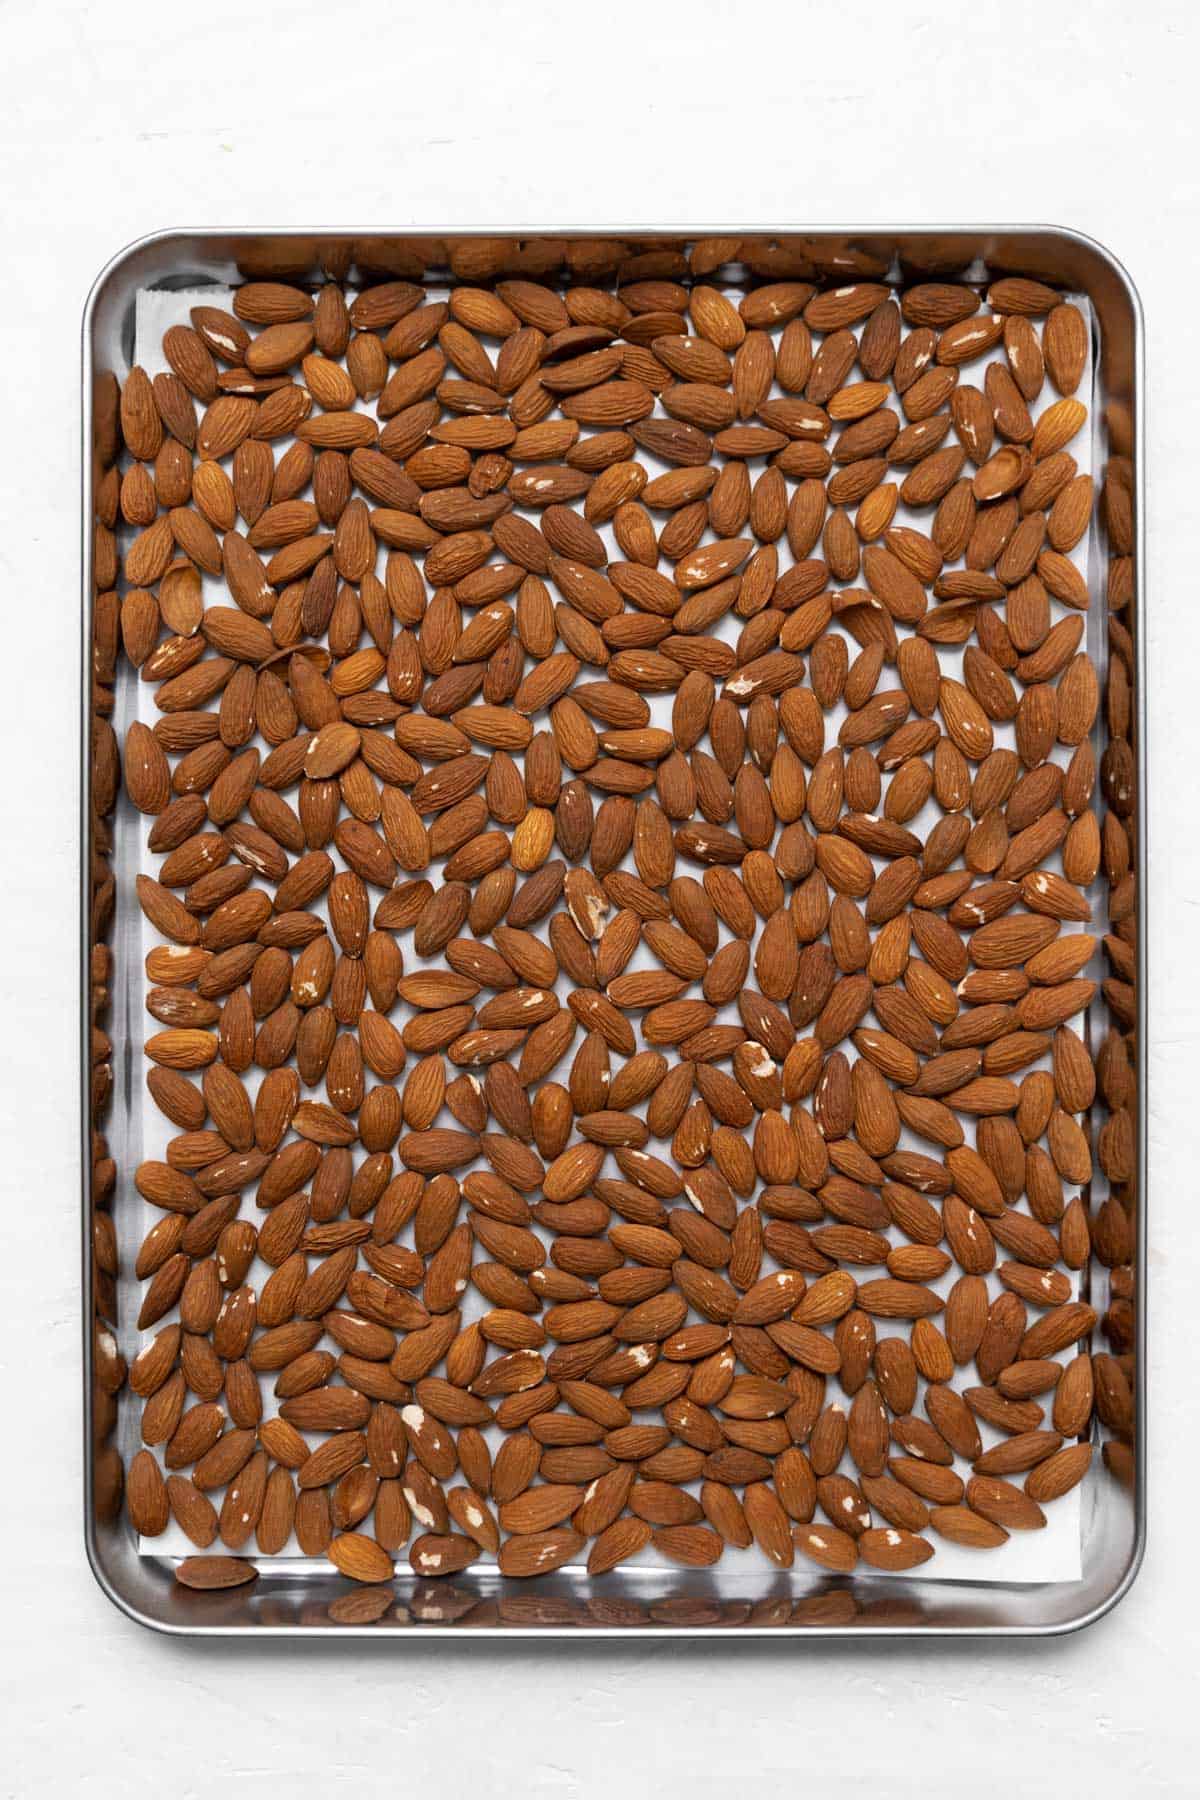 sheet pan of whole almonds